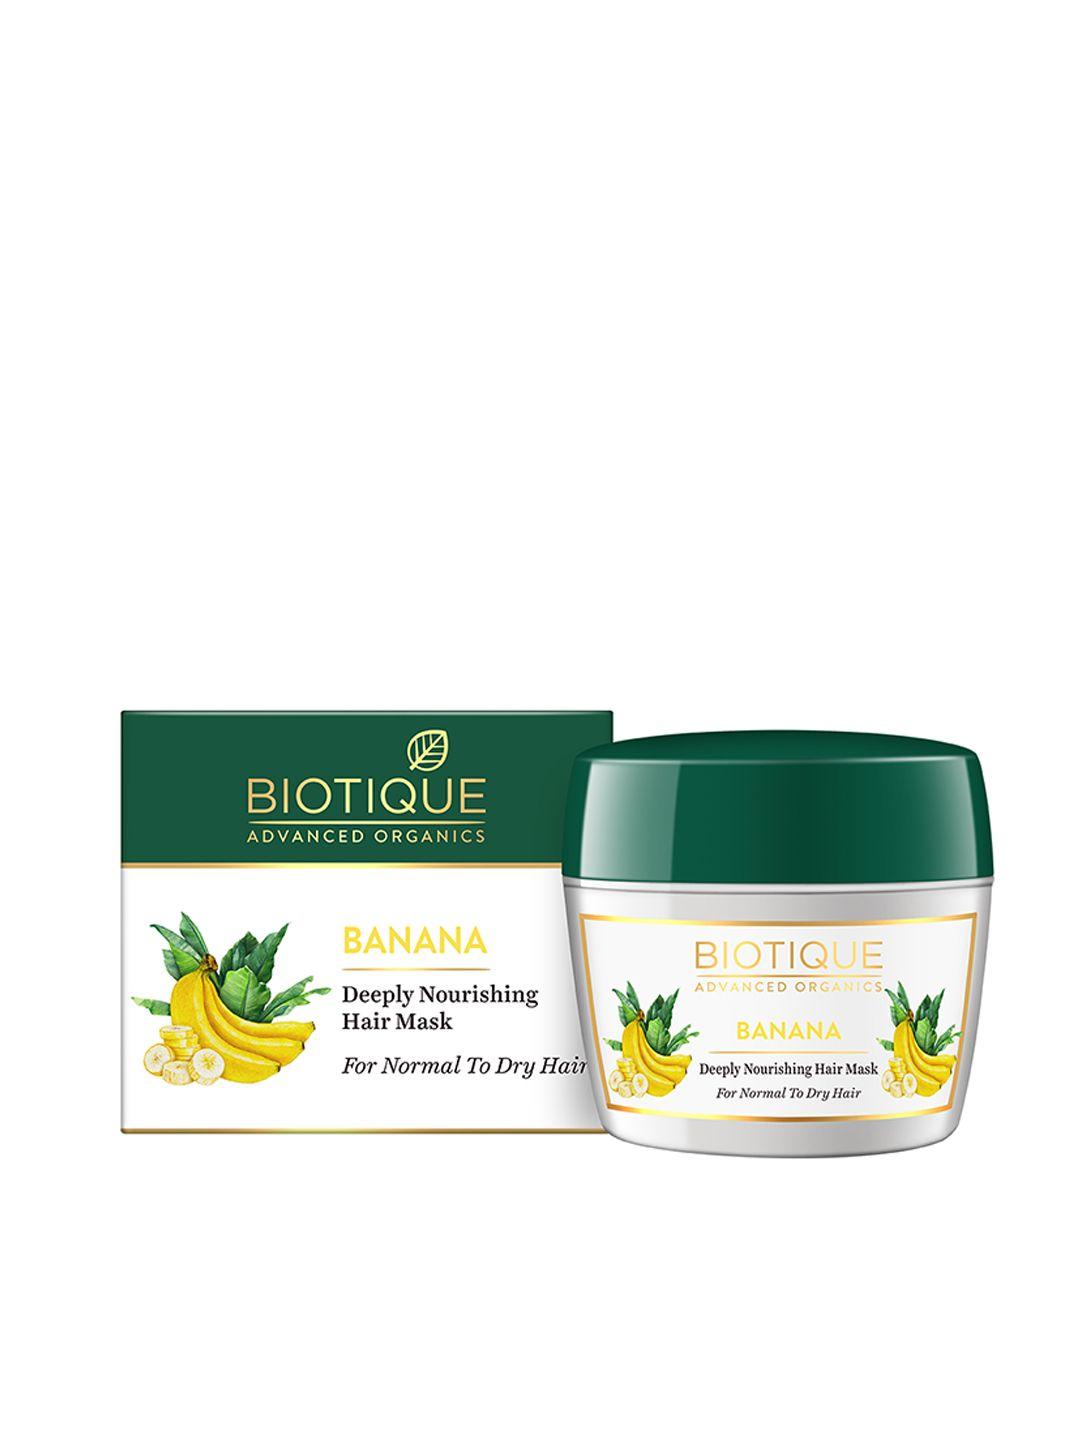 biotique unisex advanced organics banana deeply nourishing hair mask 175 g